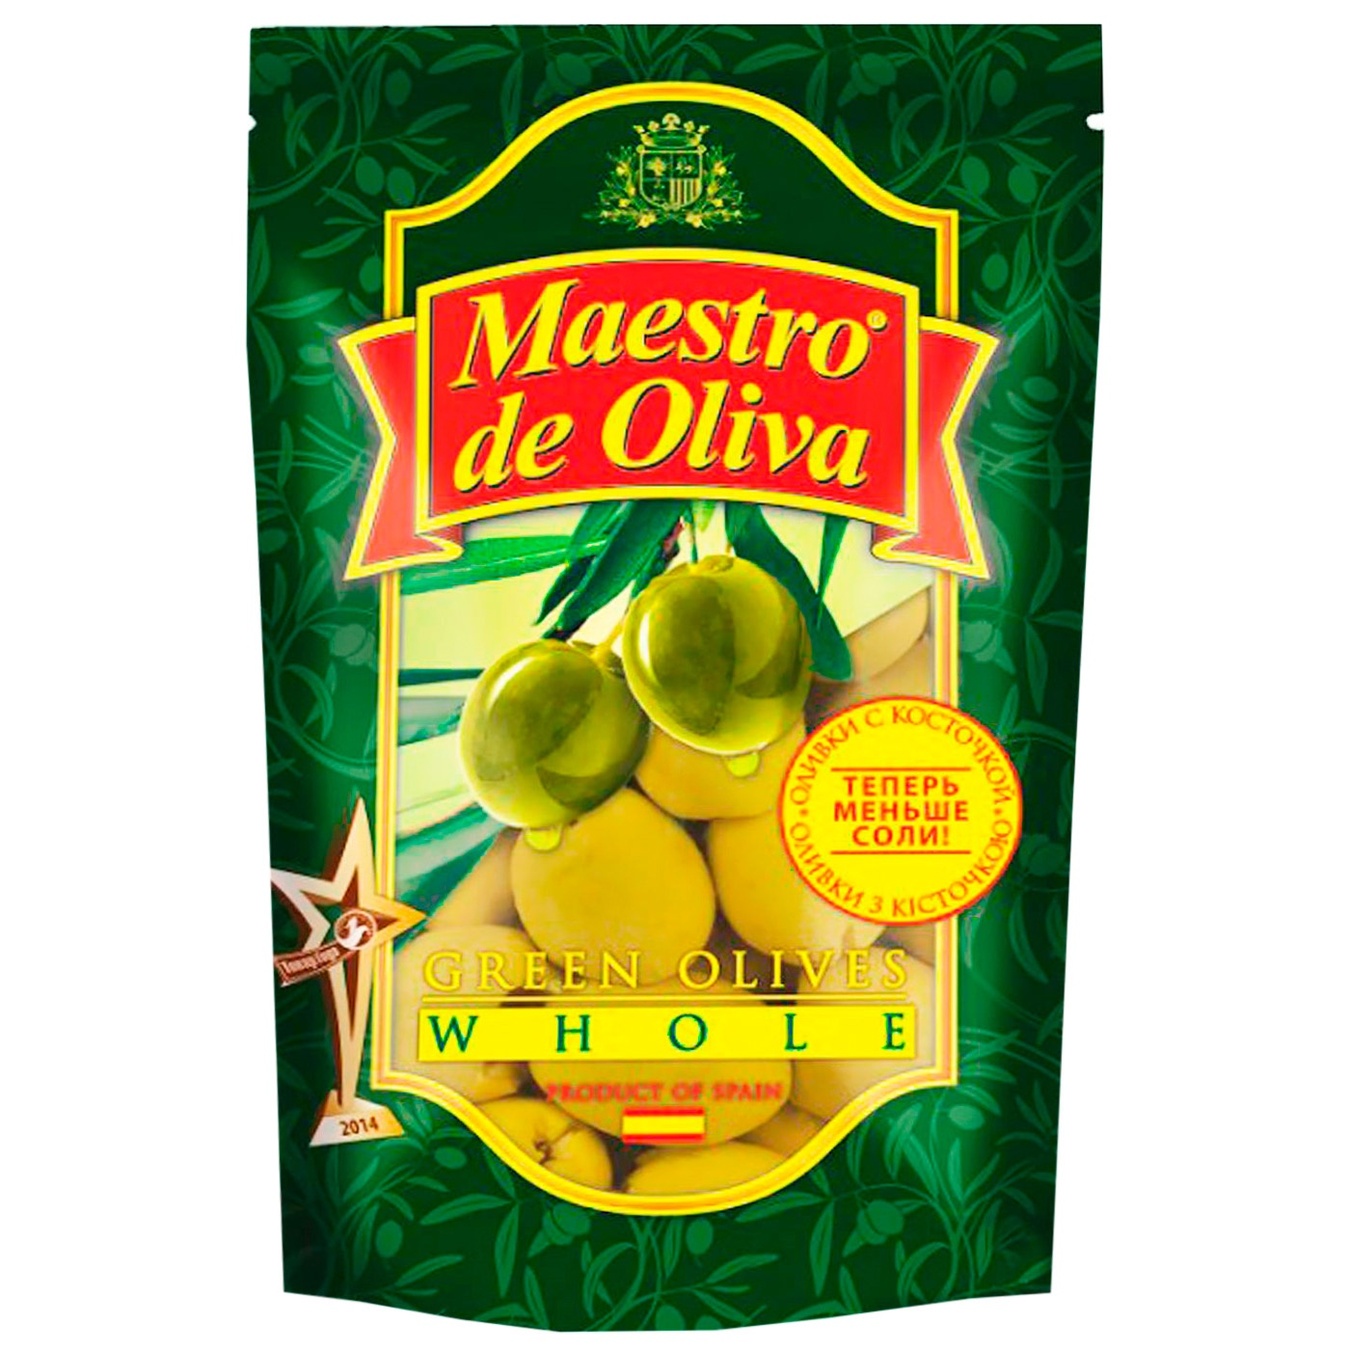 Maestro De Oliva pitted olives 190ml